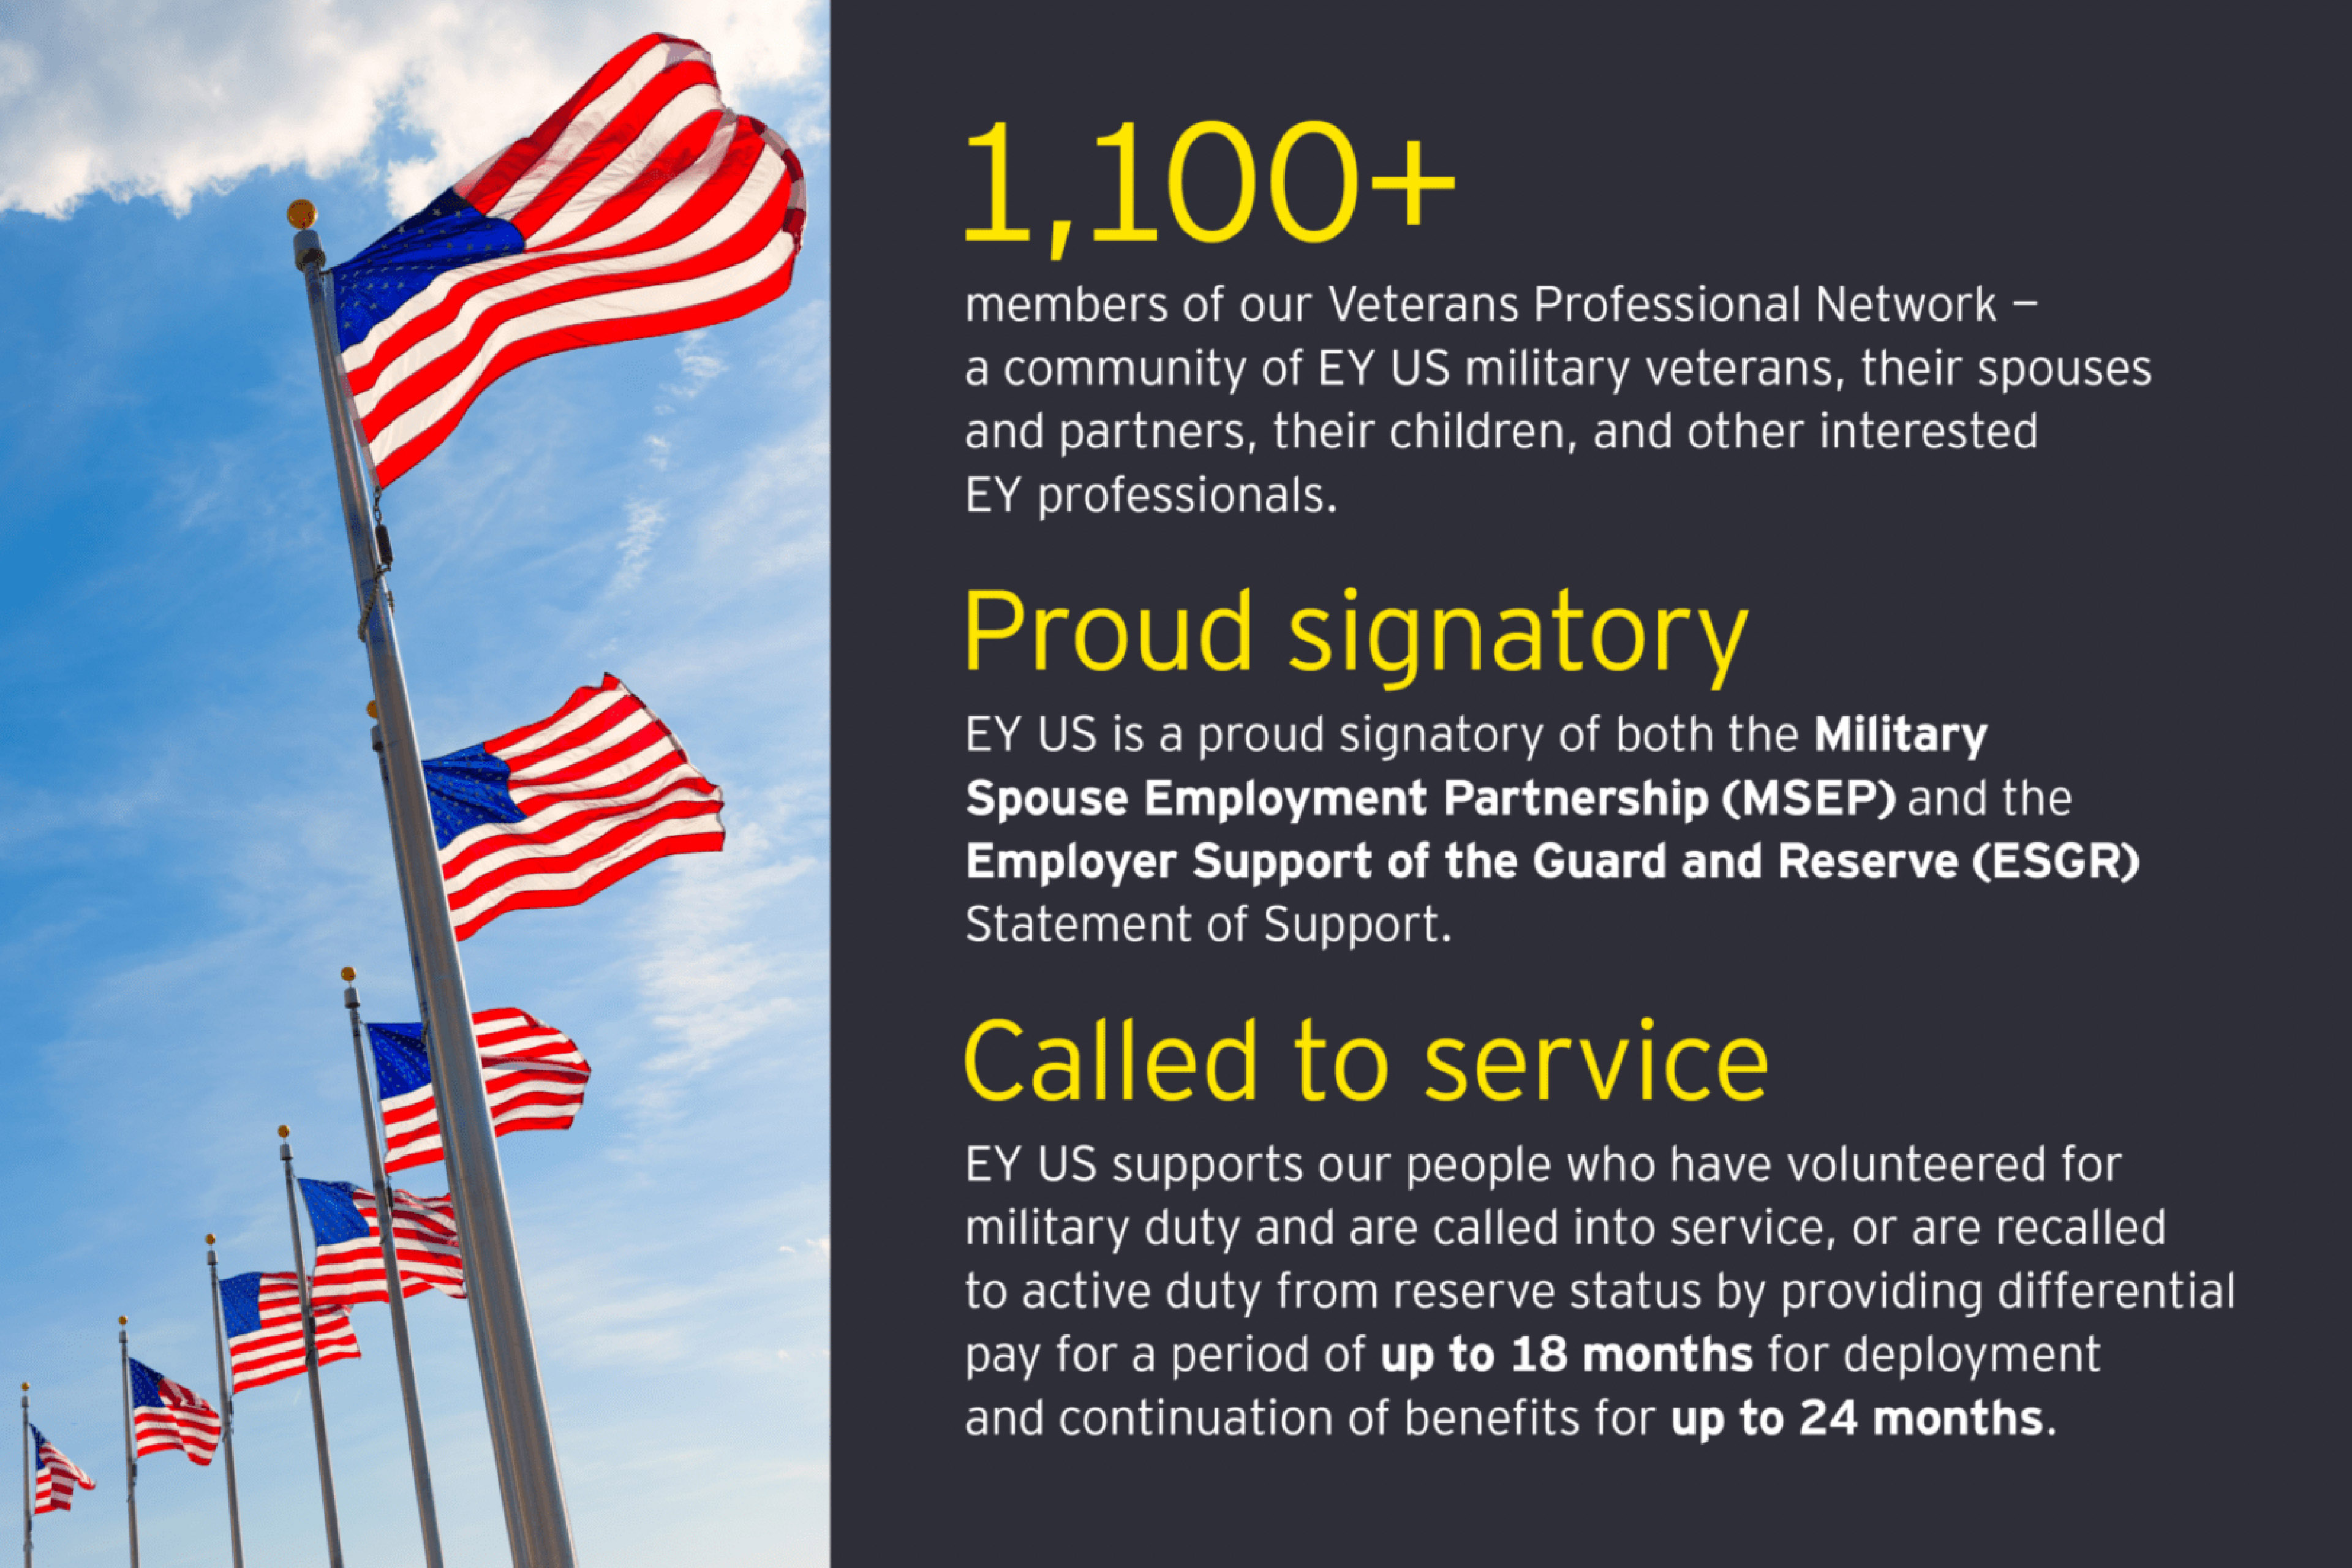 ey-veterans-professional-network